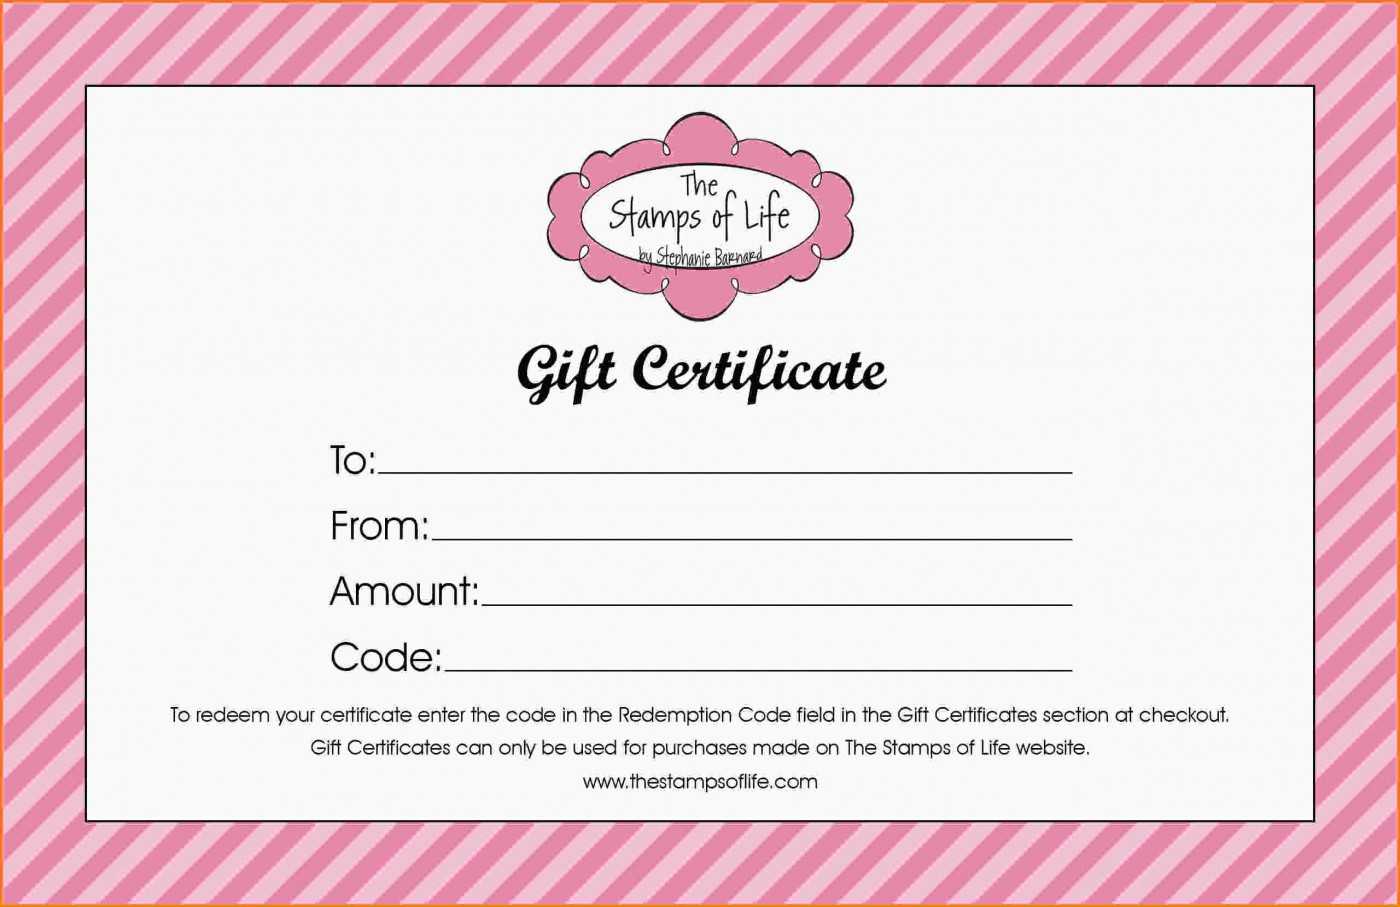 013 Salon Gift Certificate Template Amazing Ideas Nail Free With Regard To Nail Gift Certificate Template Free